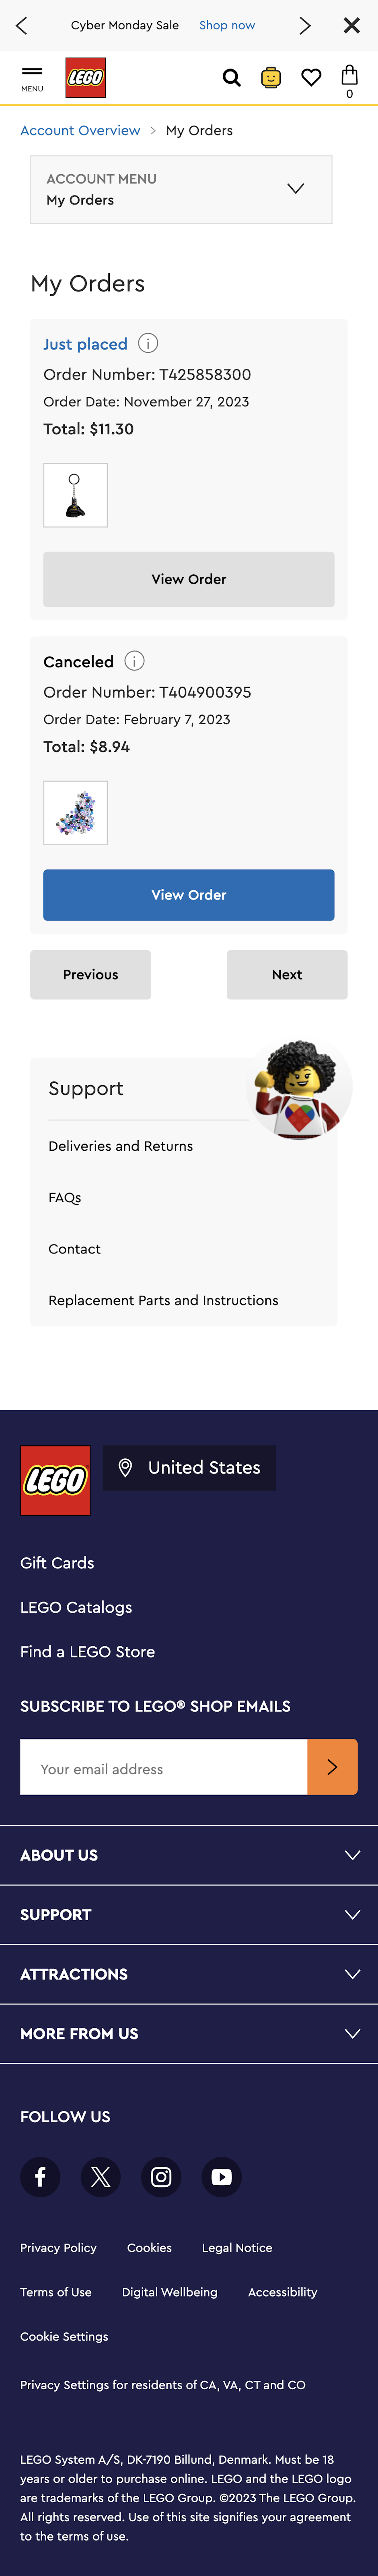 Mobile screenshot of LEGO